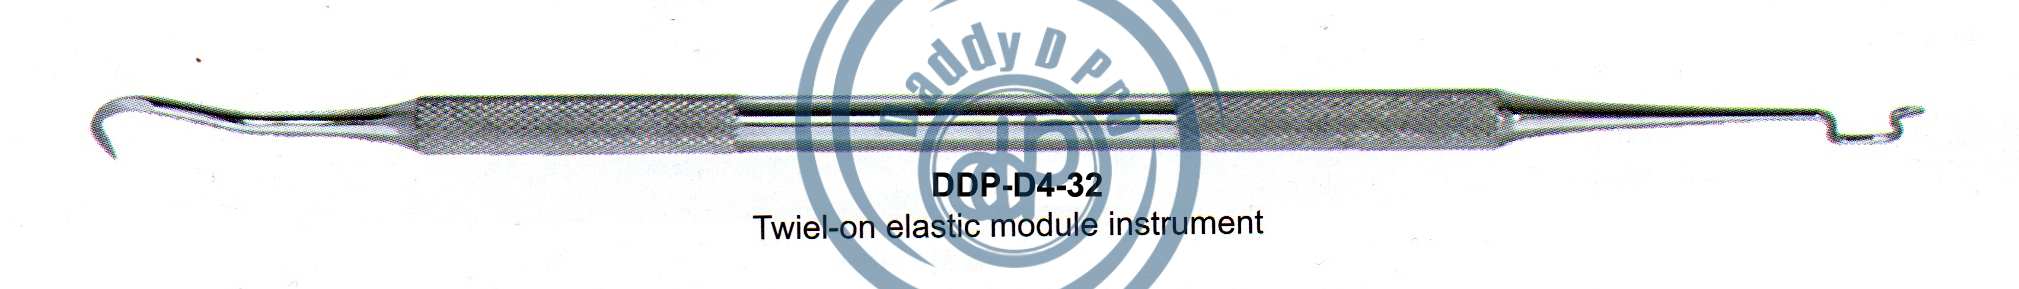 images/DDP-D4-32.png